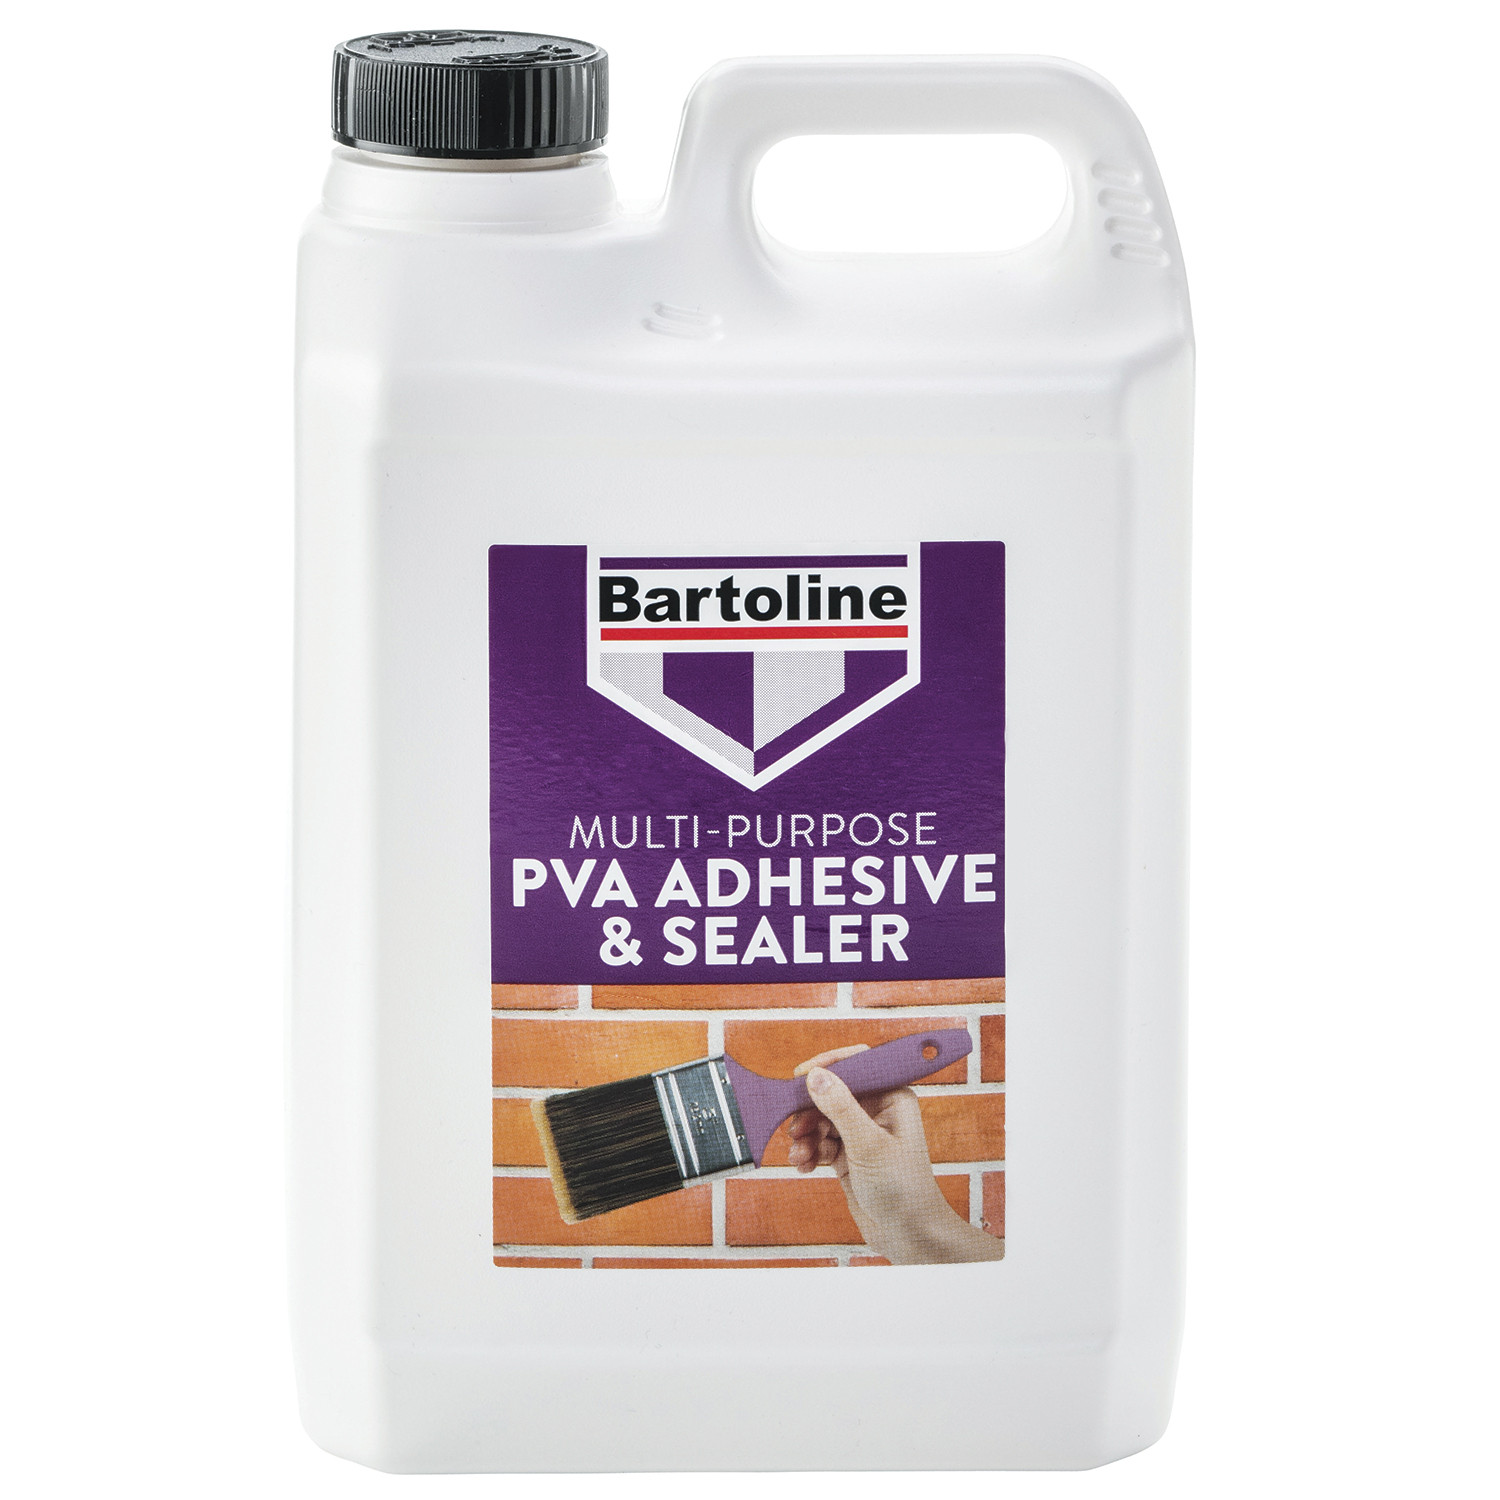 Bartoline PVA Adhesive and Sealer 2.5L Image